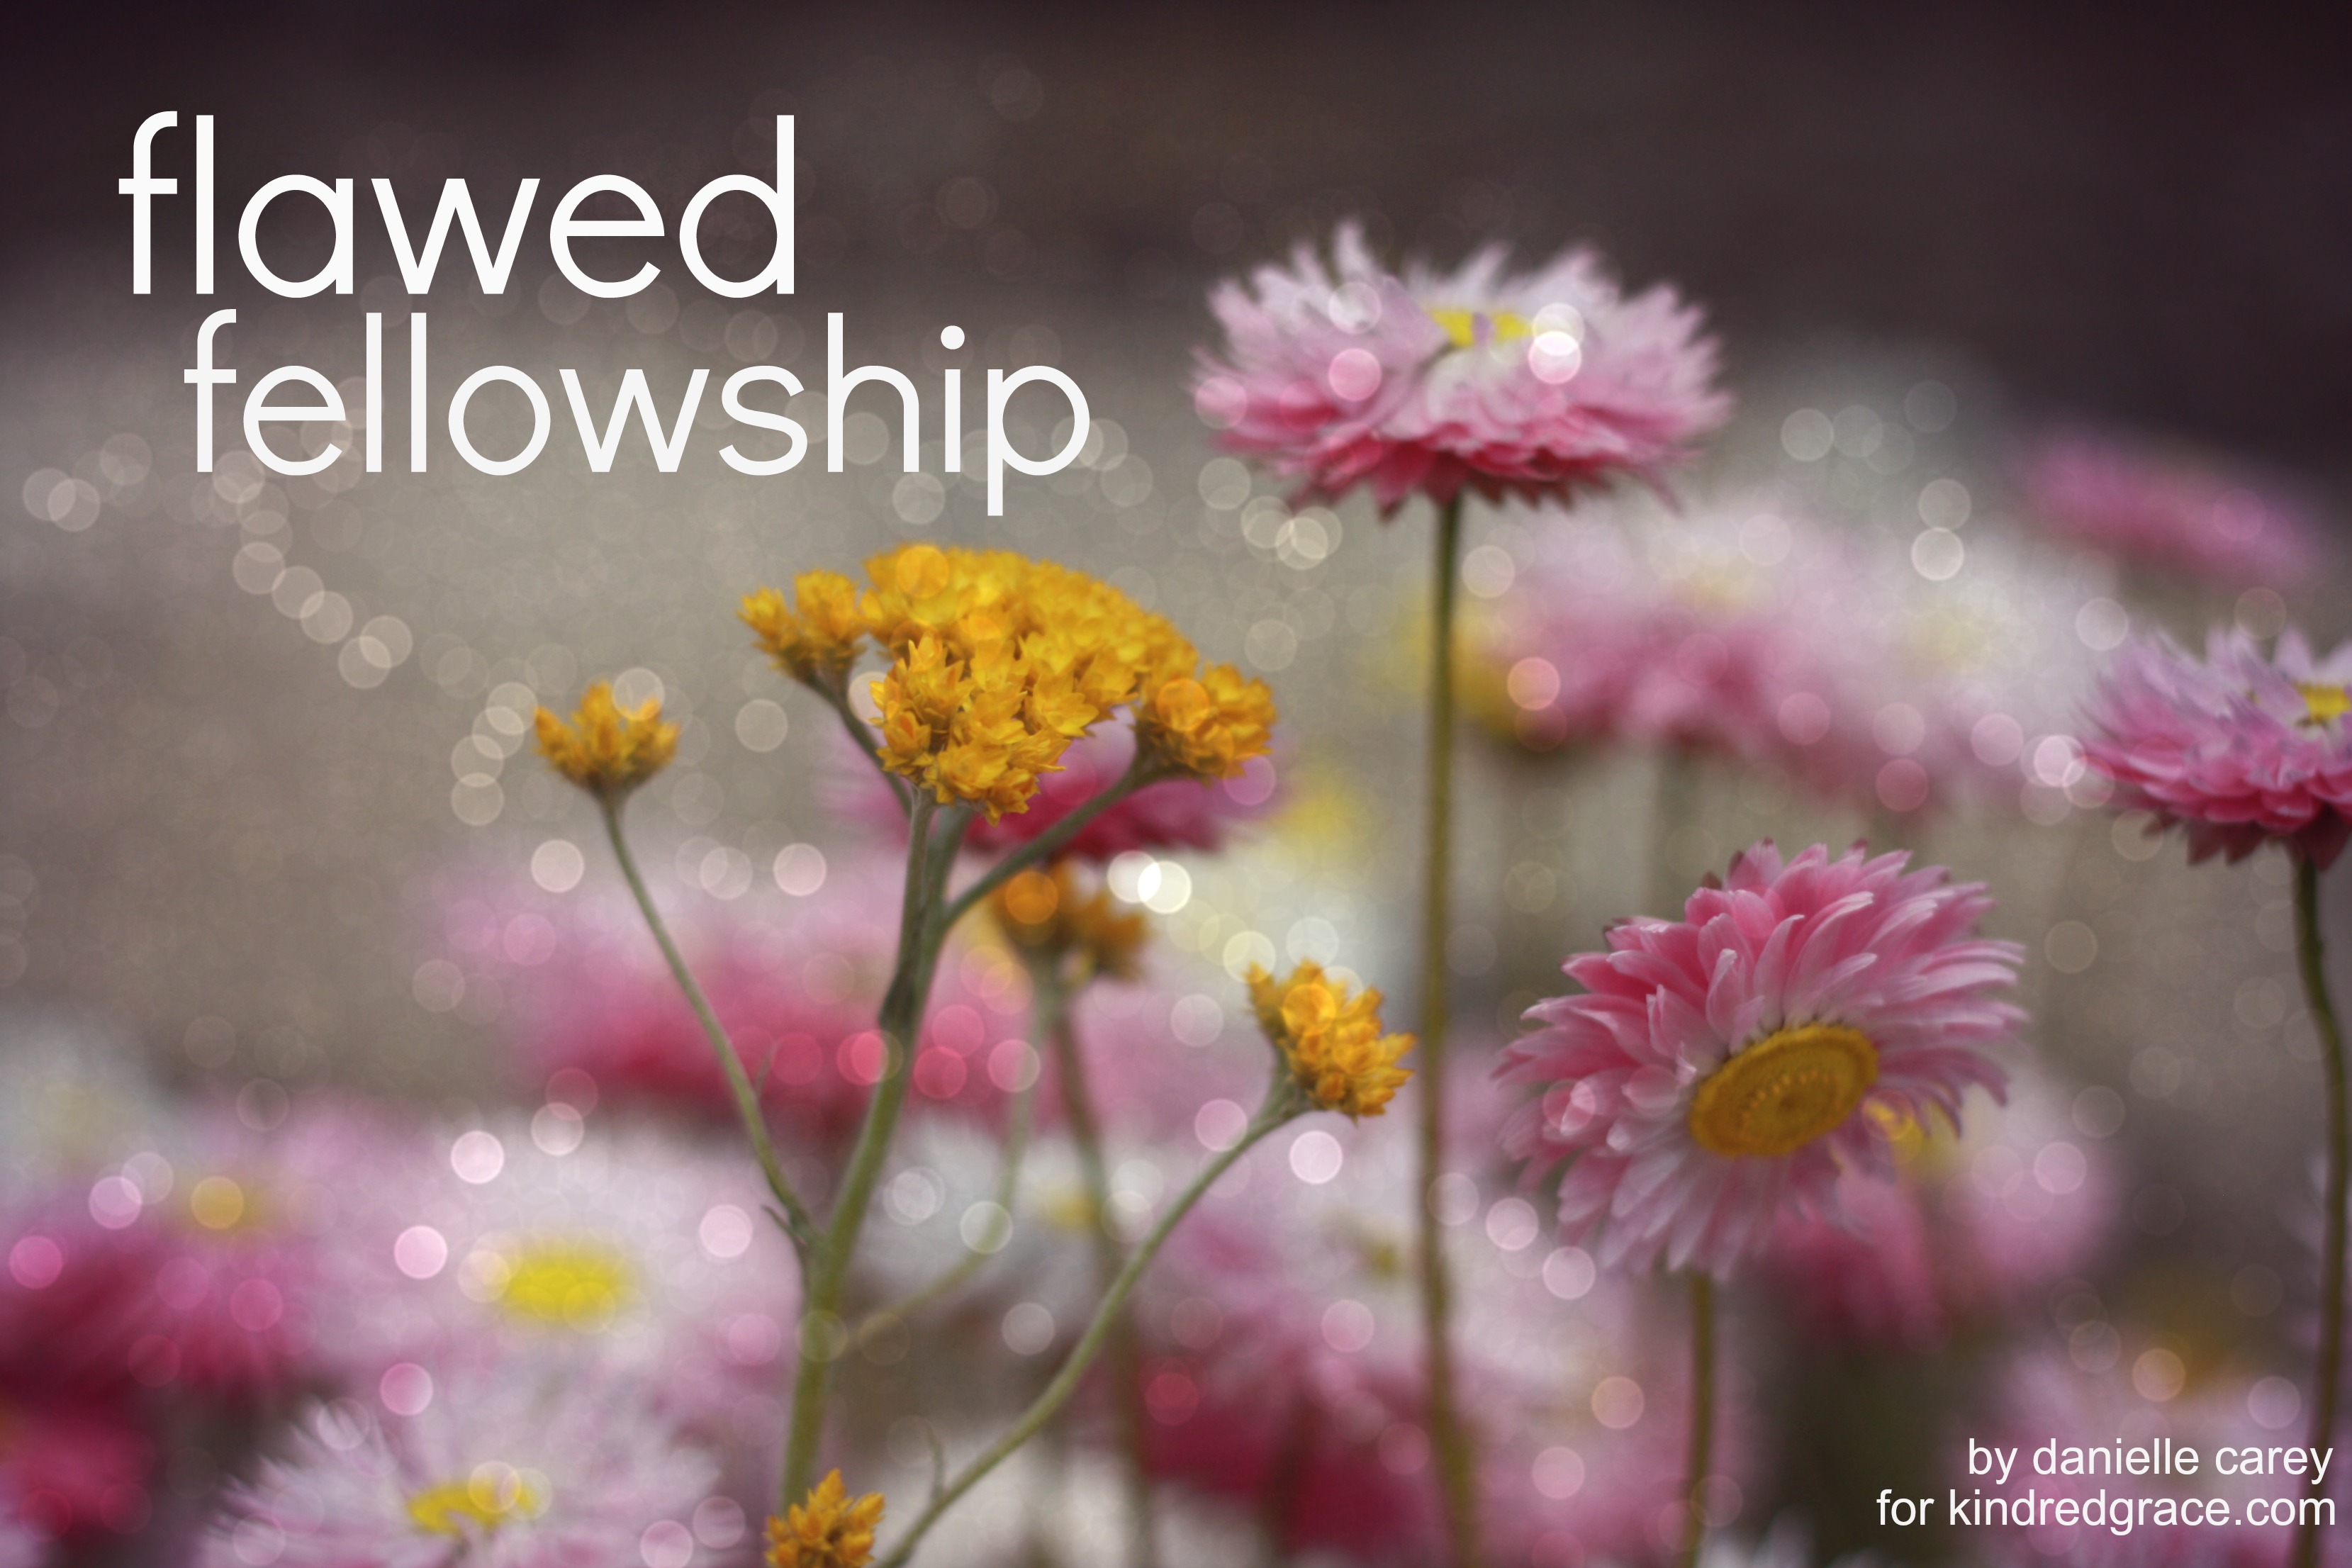 flawed fellowship